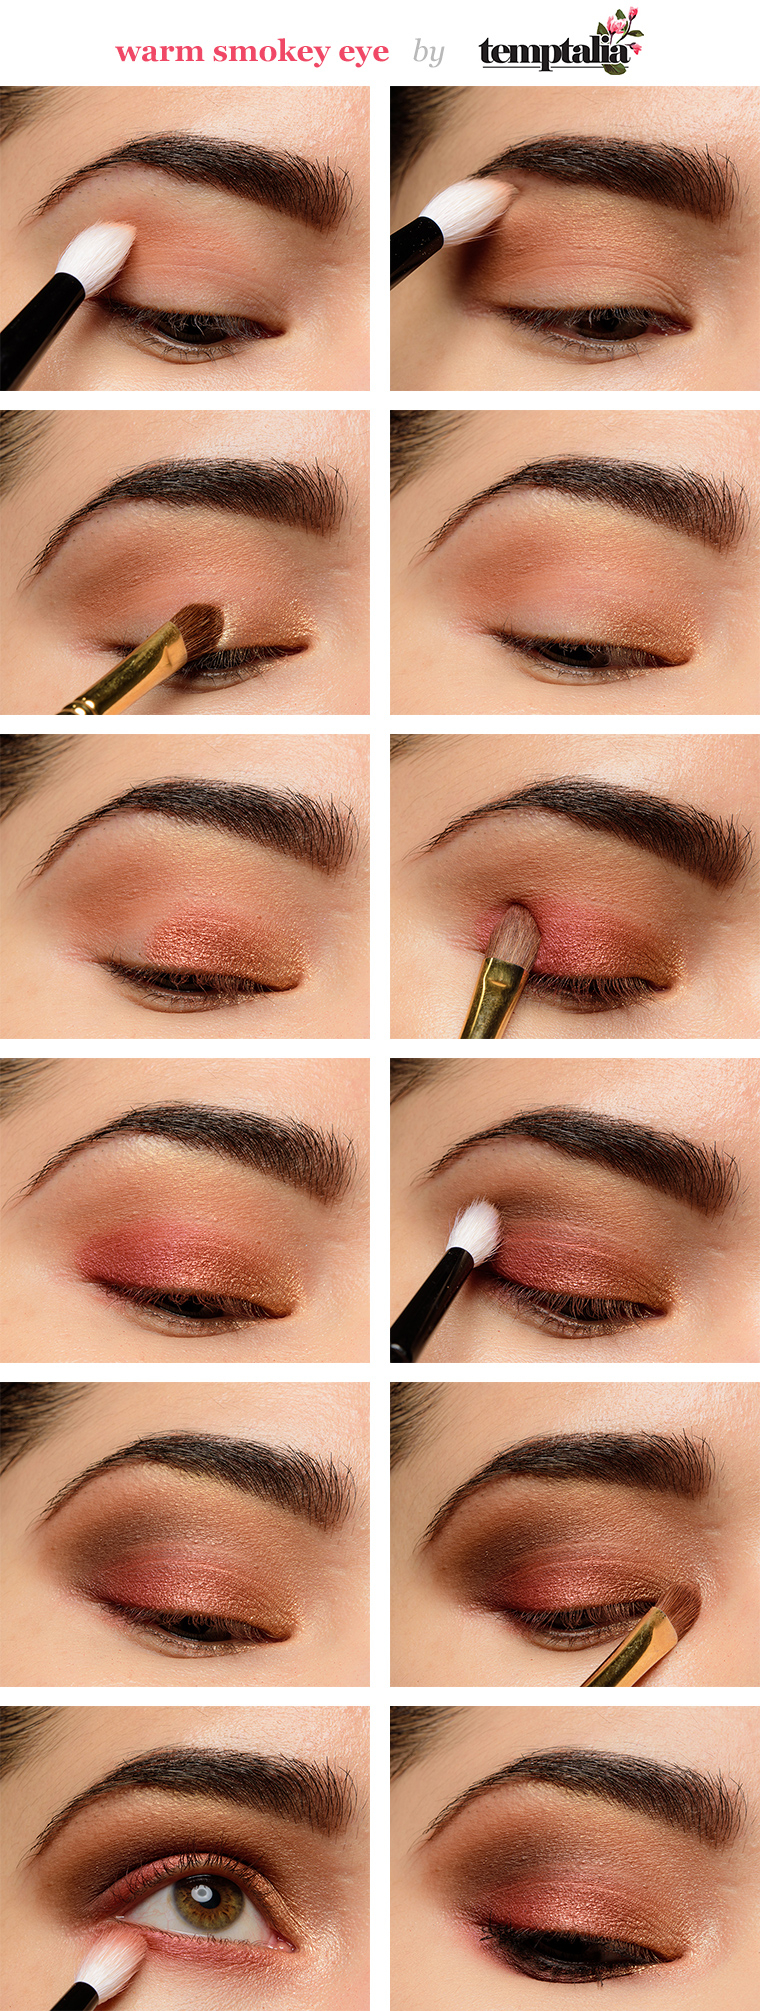 How To Smokey Eye Makeup How To Apply Eyeshadow Smokey Eye Makeup Tutorial For Beginners